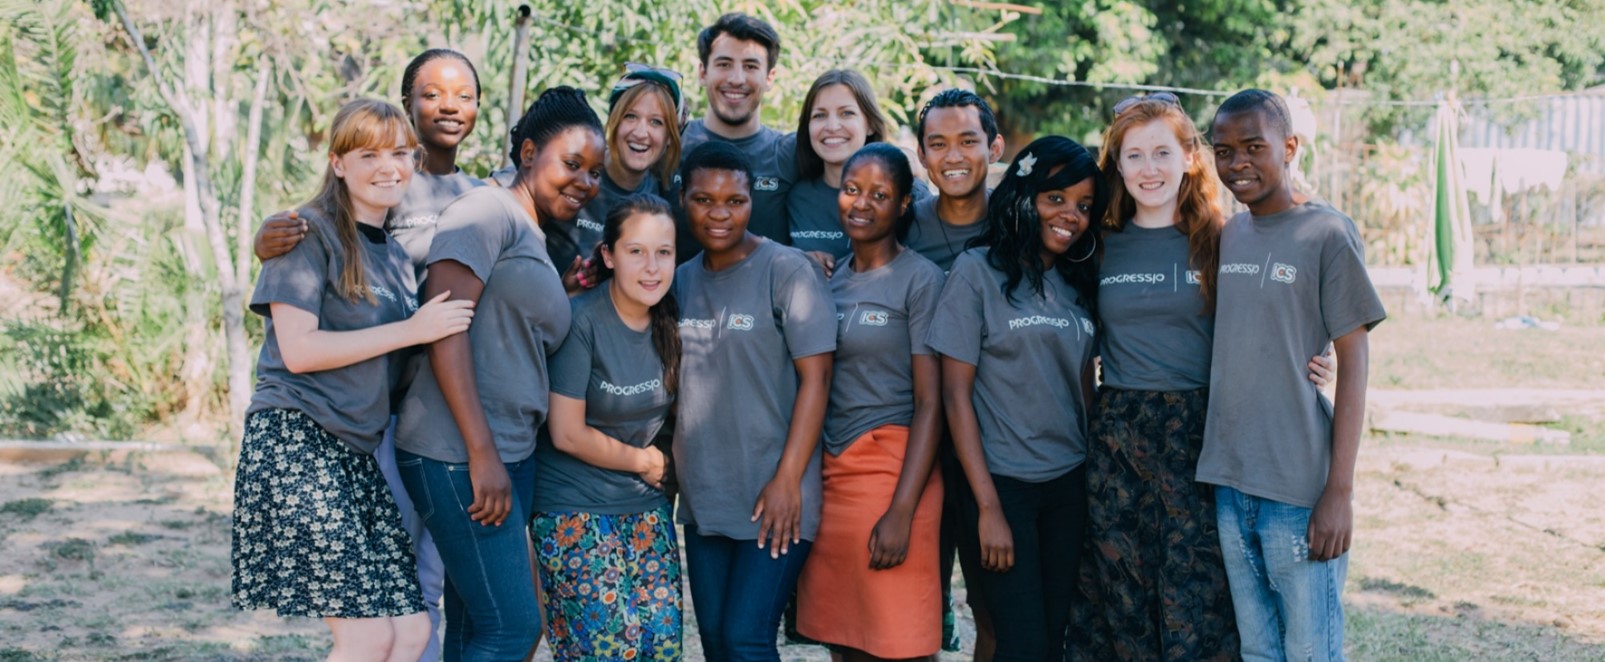 Maria with her Progressio ICS volunteer team in Zimbabwe